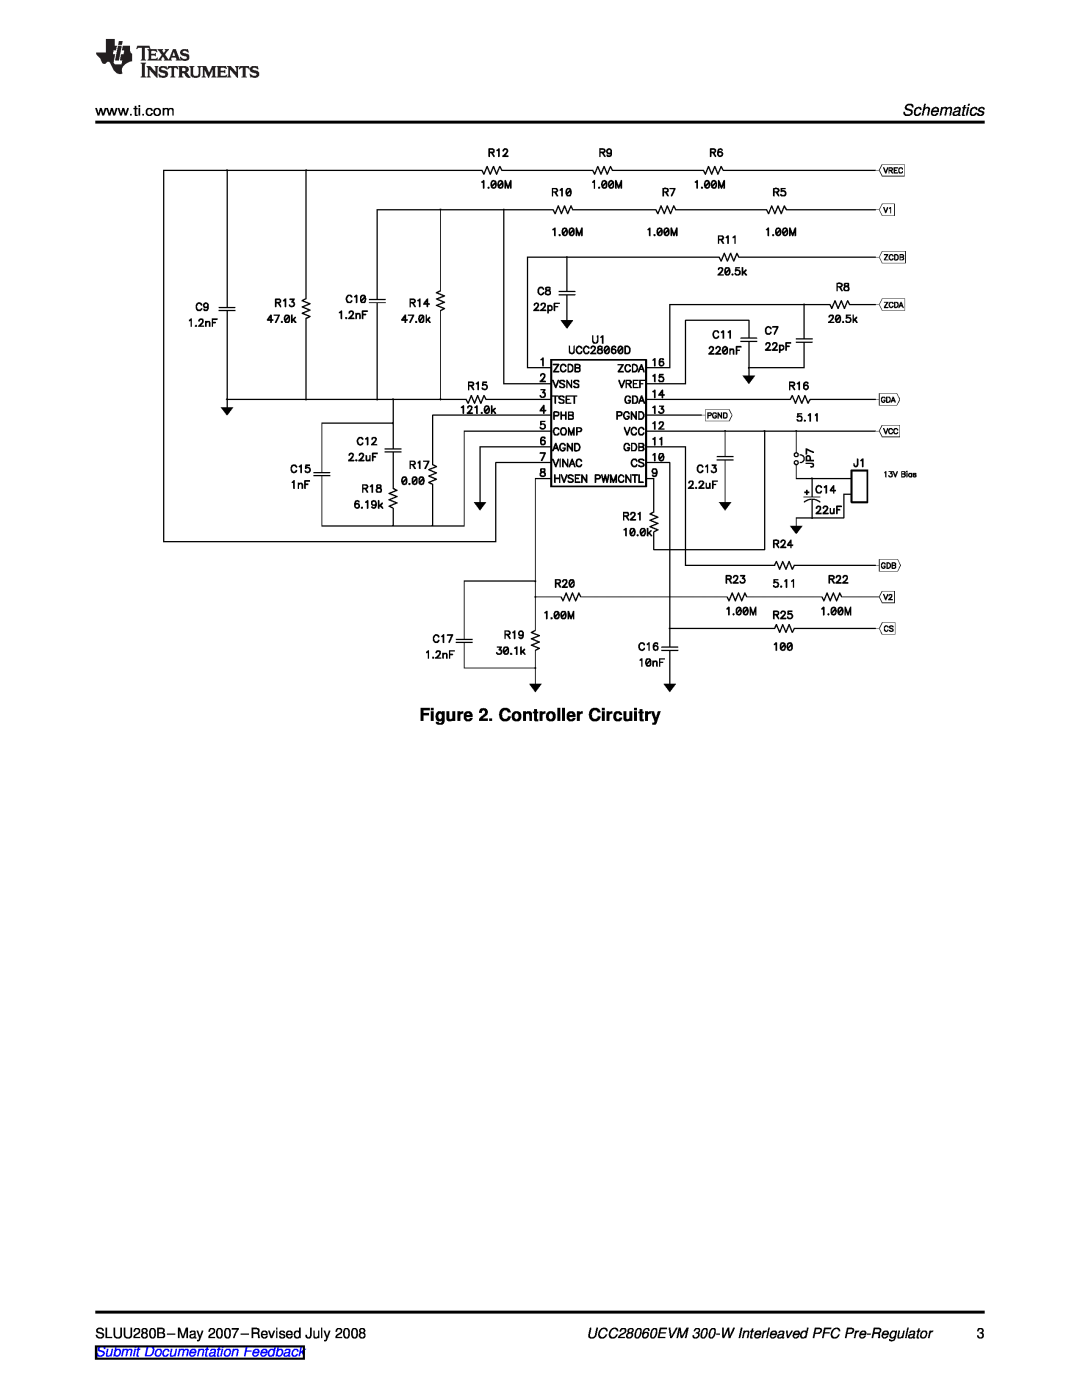 Texas Instruments specifications Controller Circuitry, Schematics, UCC28060EVM 300-W Interleaved PFC Pre-Regulator 